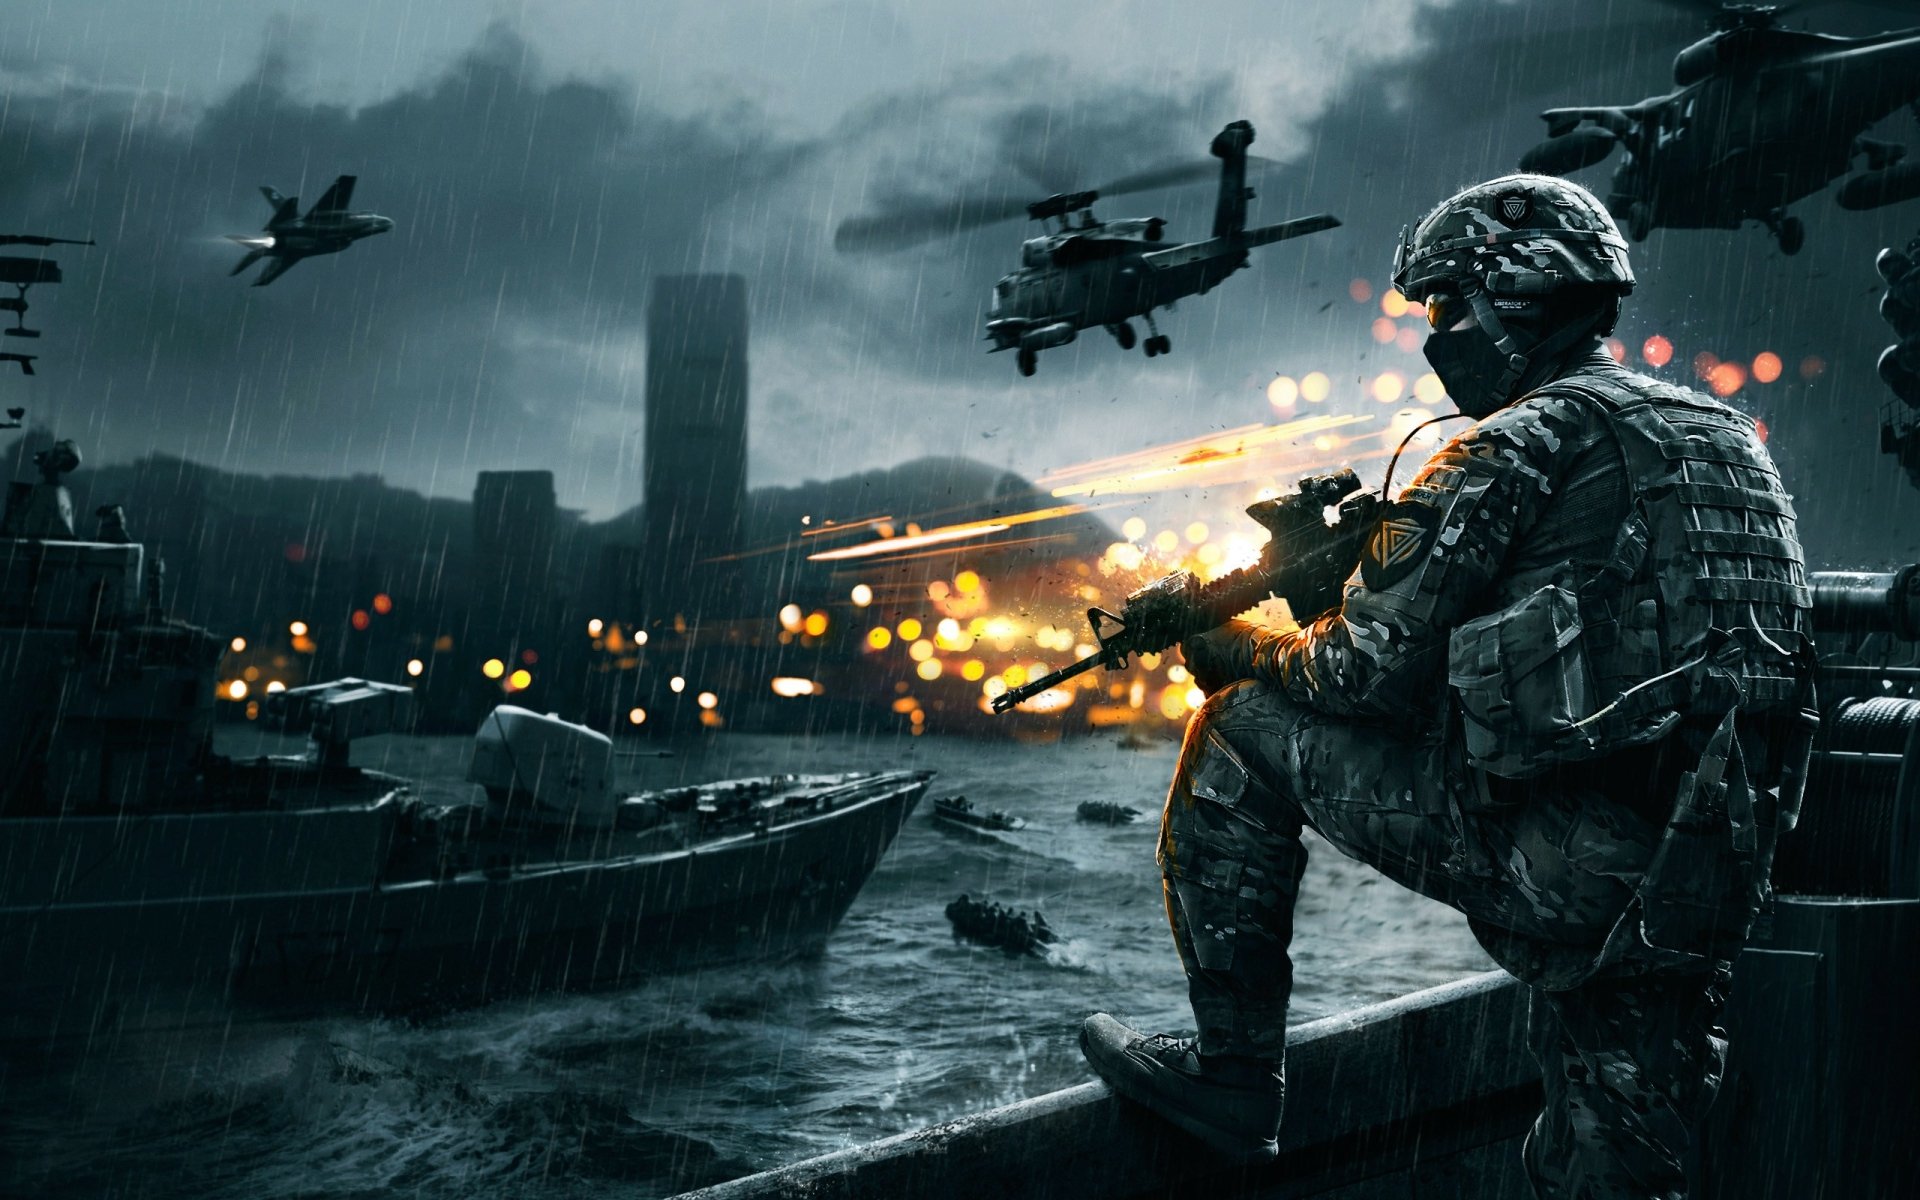 Battlefield 3 Wallpapers, HD Battlefield 3 Backgrounds, Free Images Download